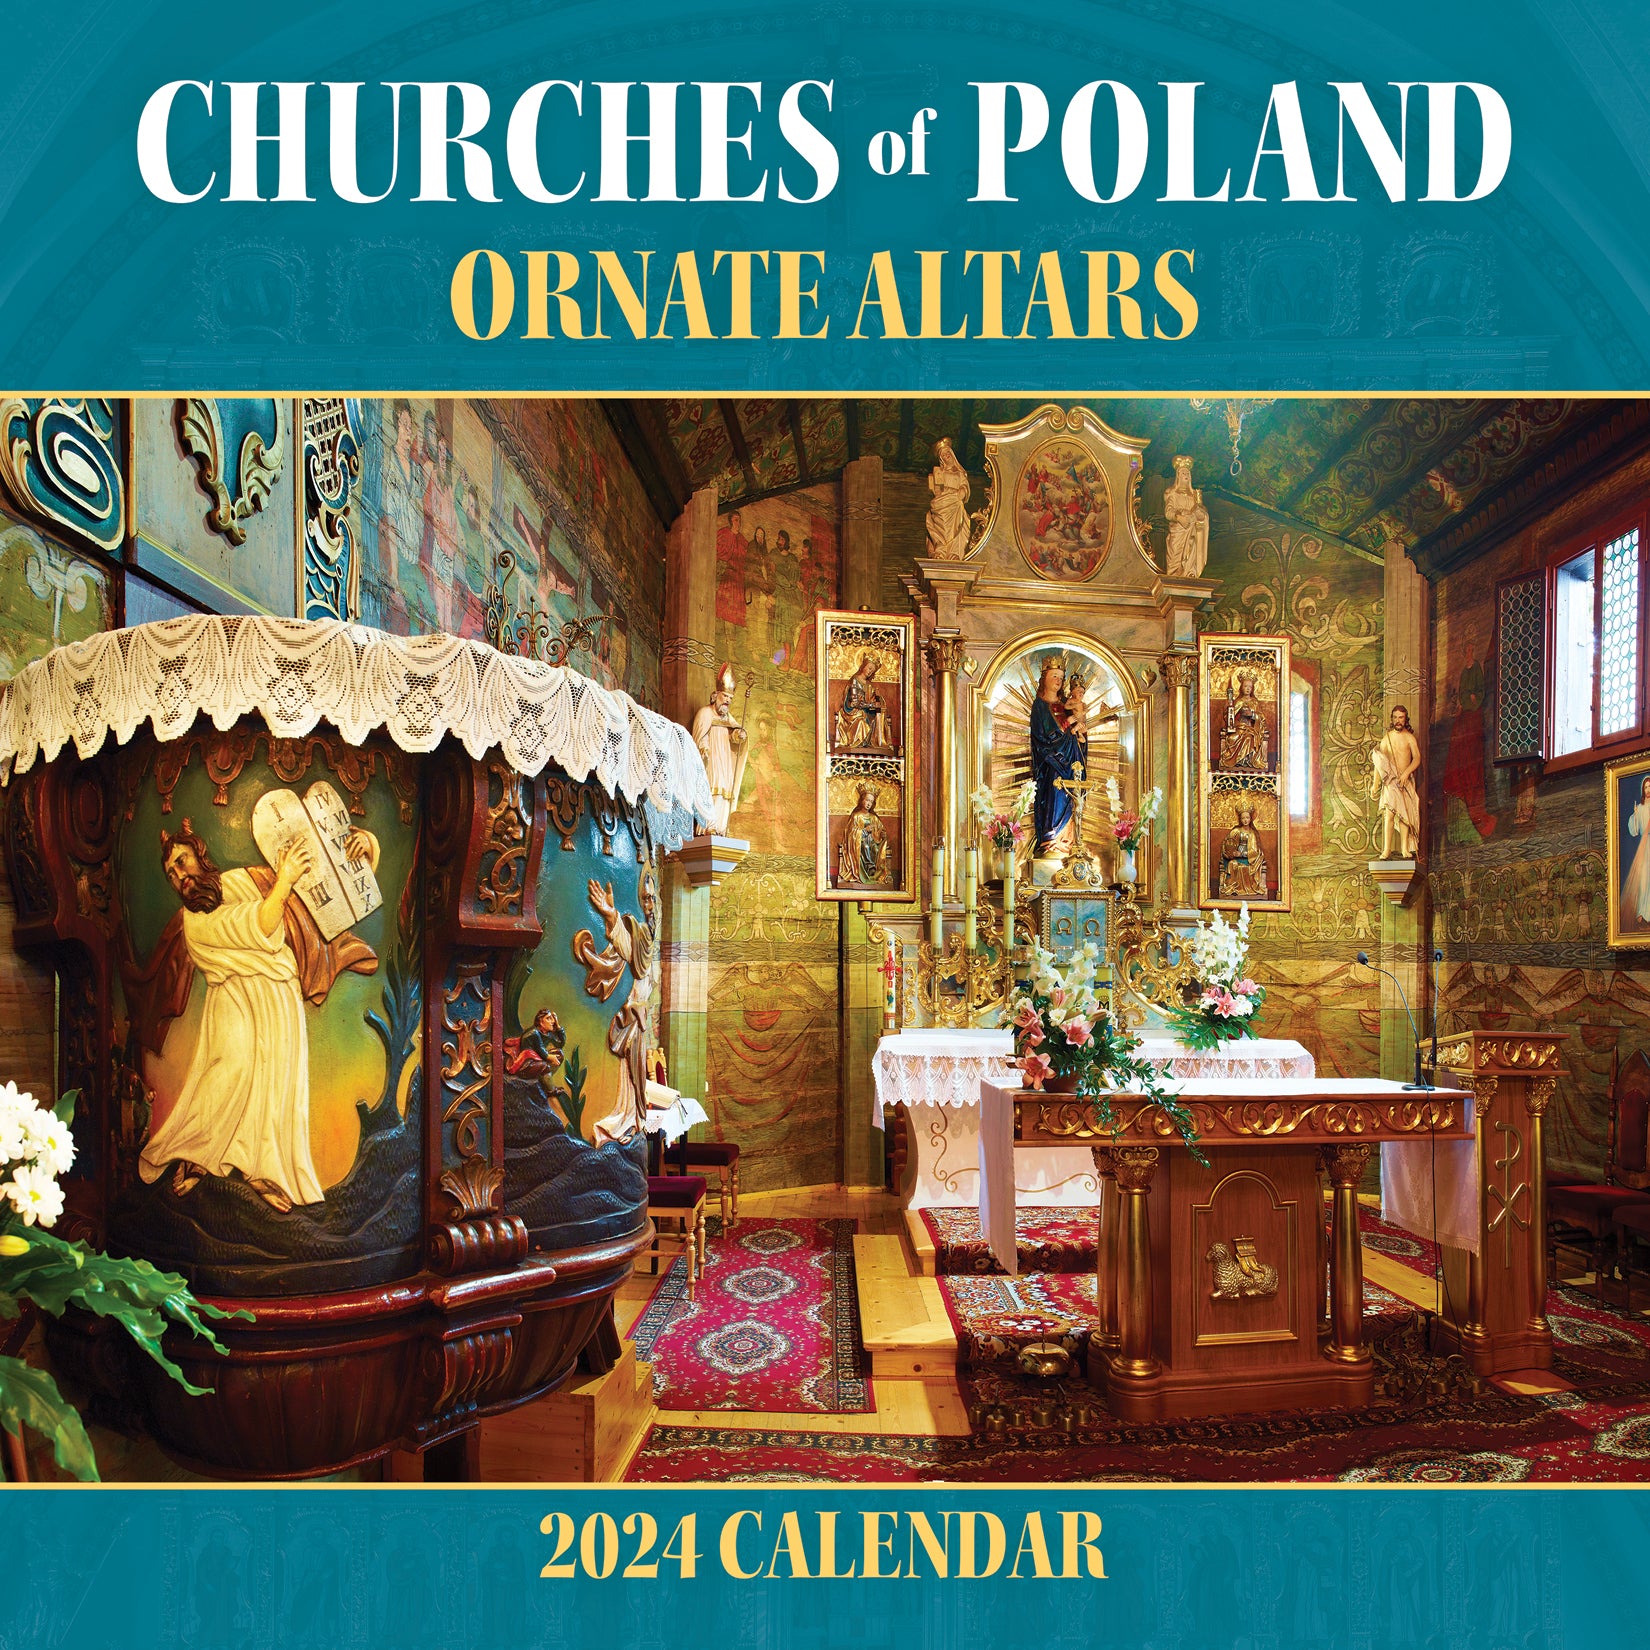 2024 Calendar - Churches of Poland, Ornate Altars